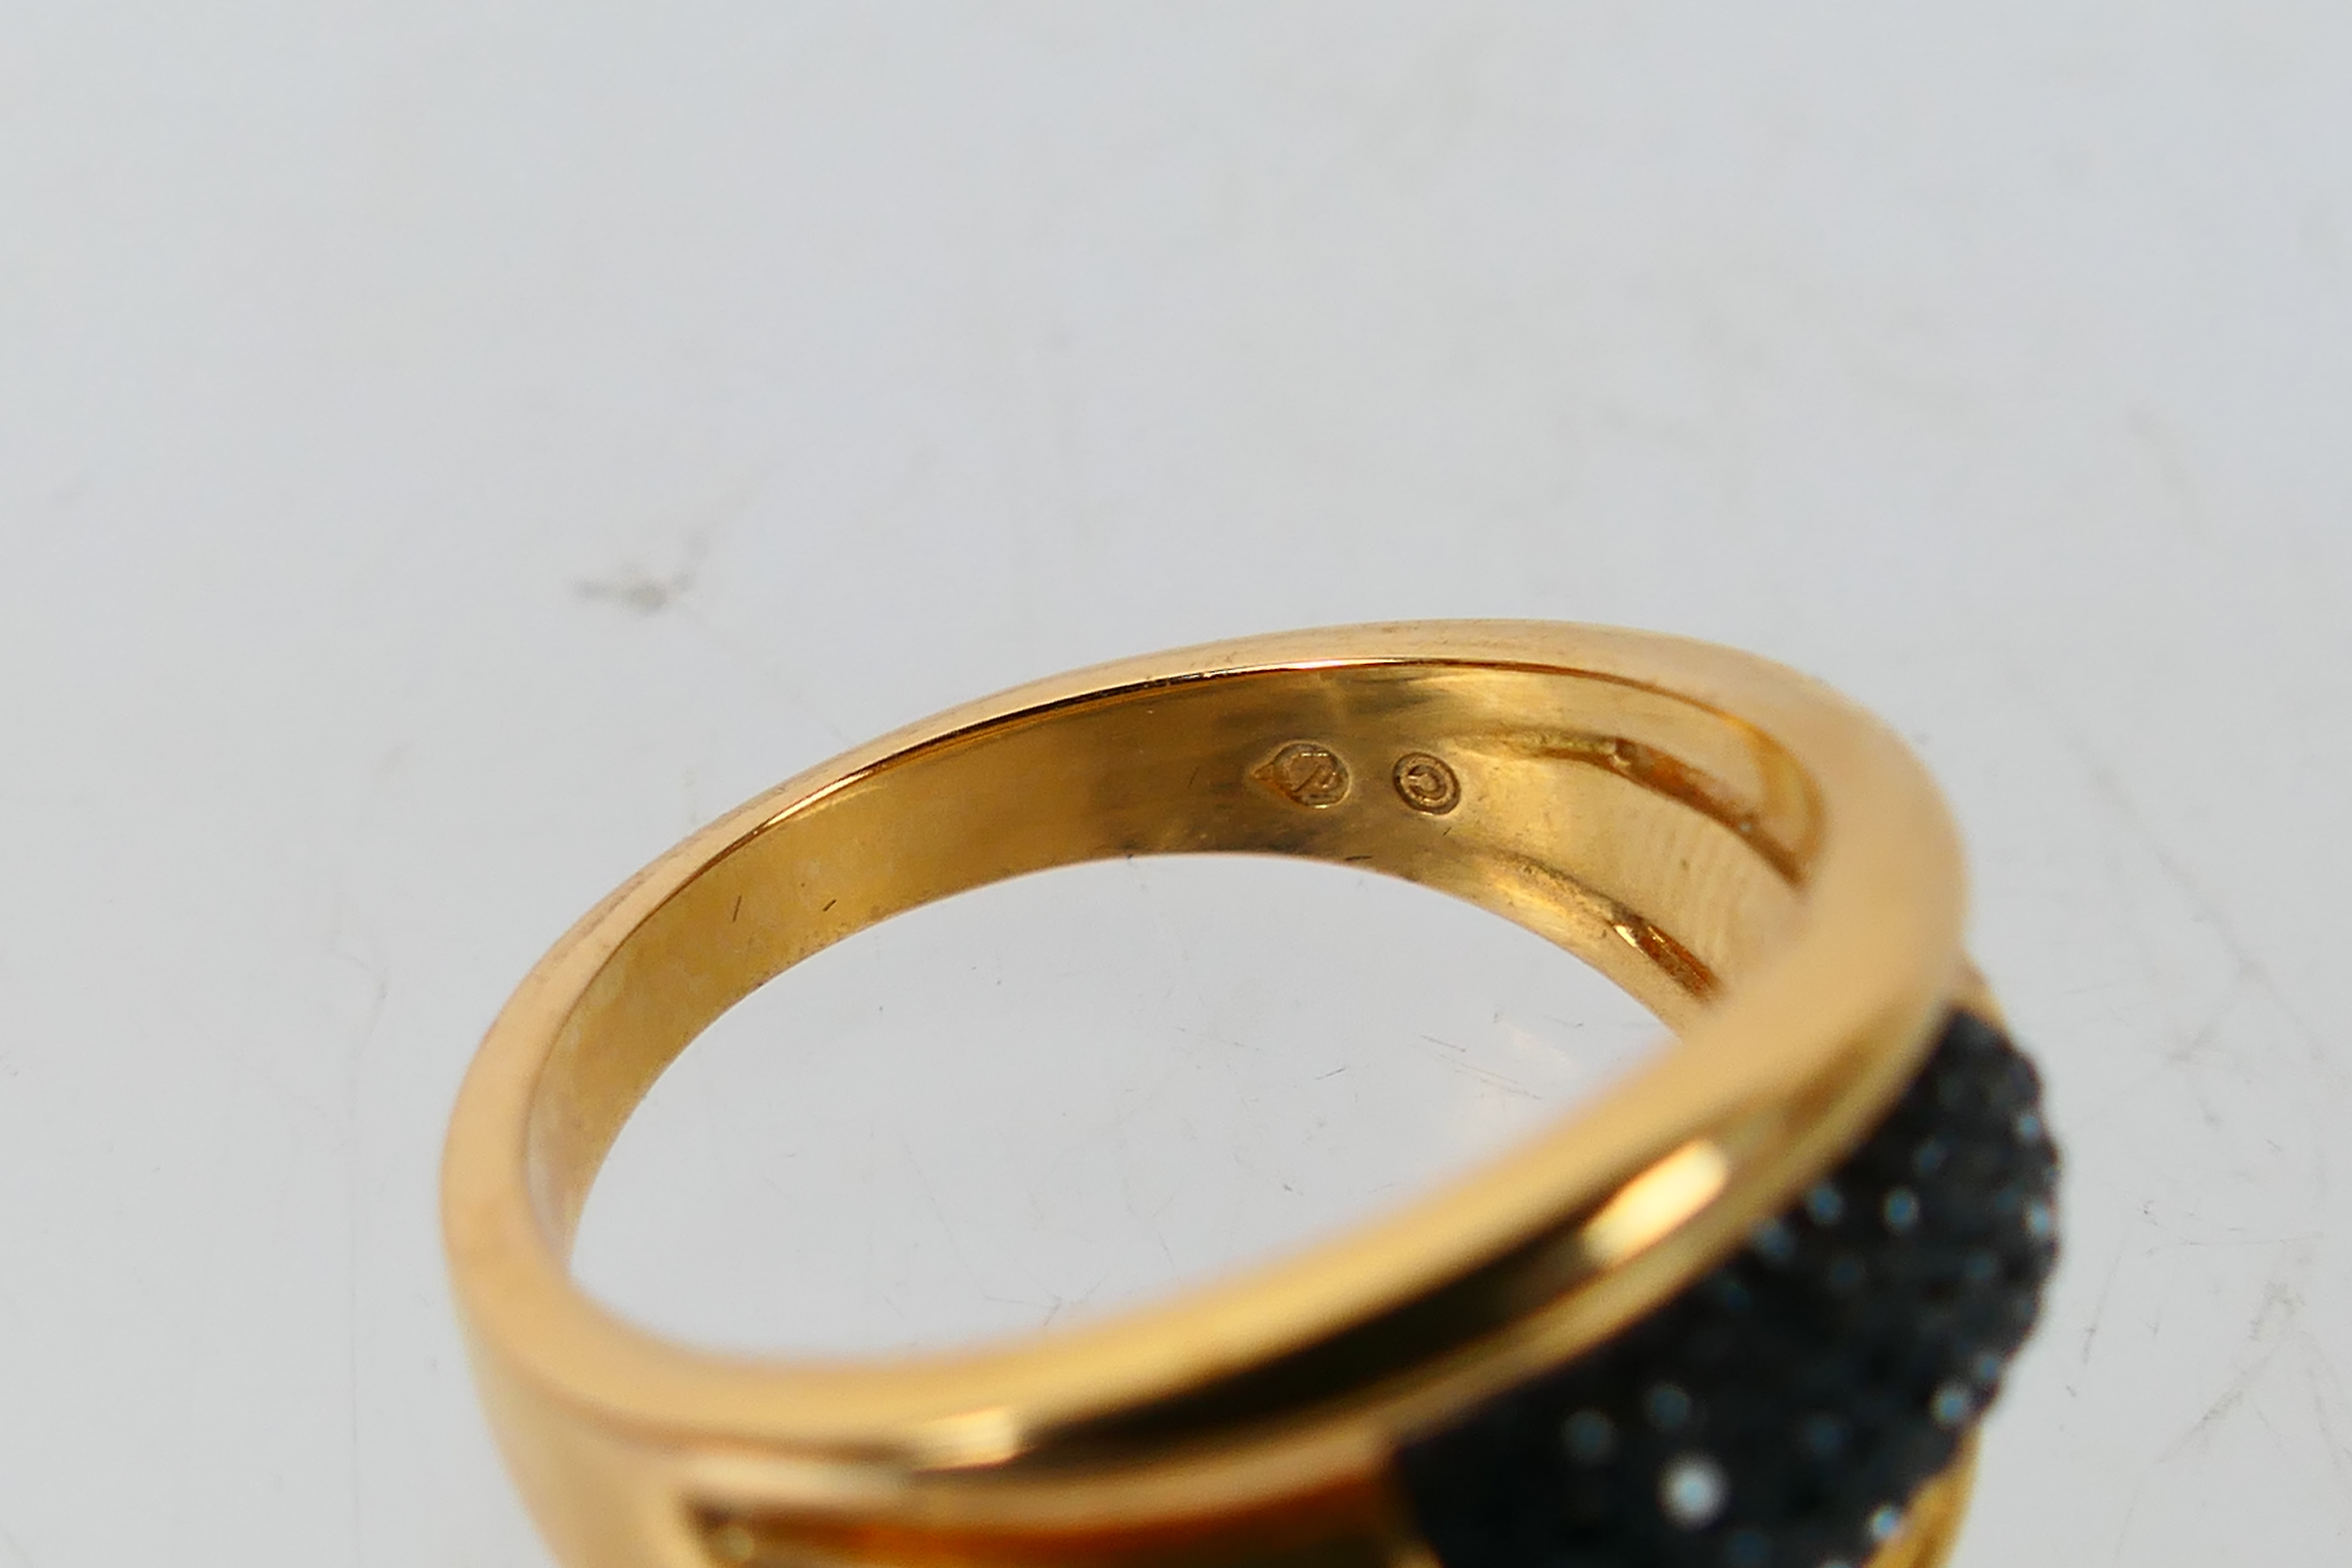 Swarovski - A boxed Swarovski #5124164 Cypress black rose gold plated ring. - Image 5 of 7